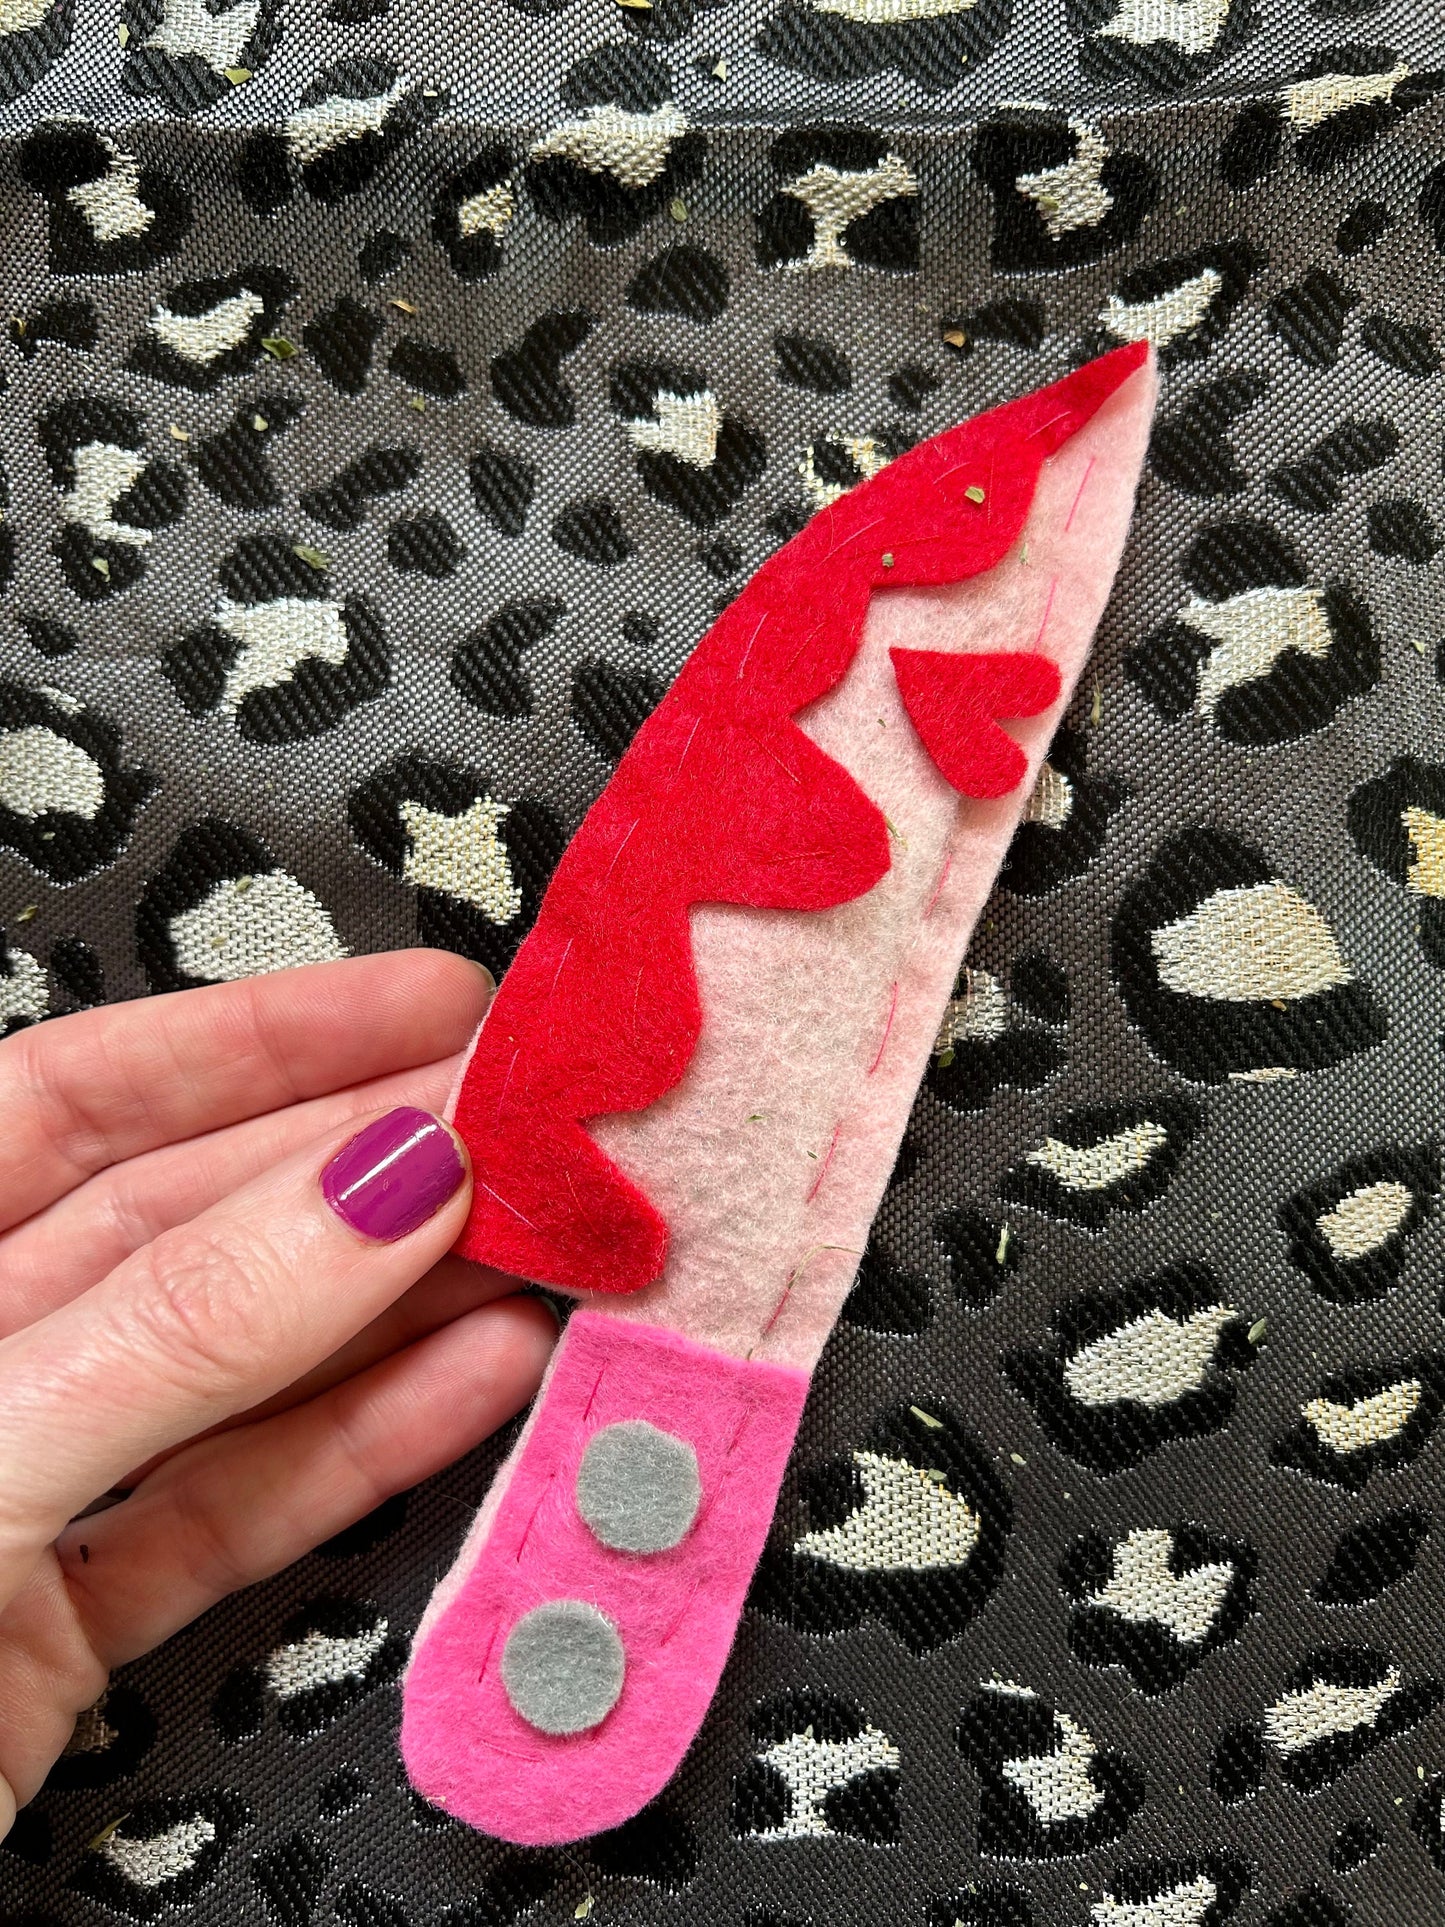 A Valentine's Day knife catnip cat toy